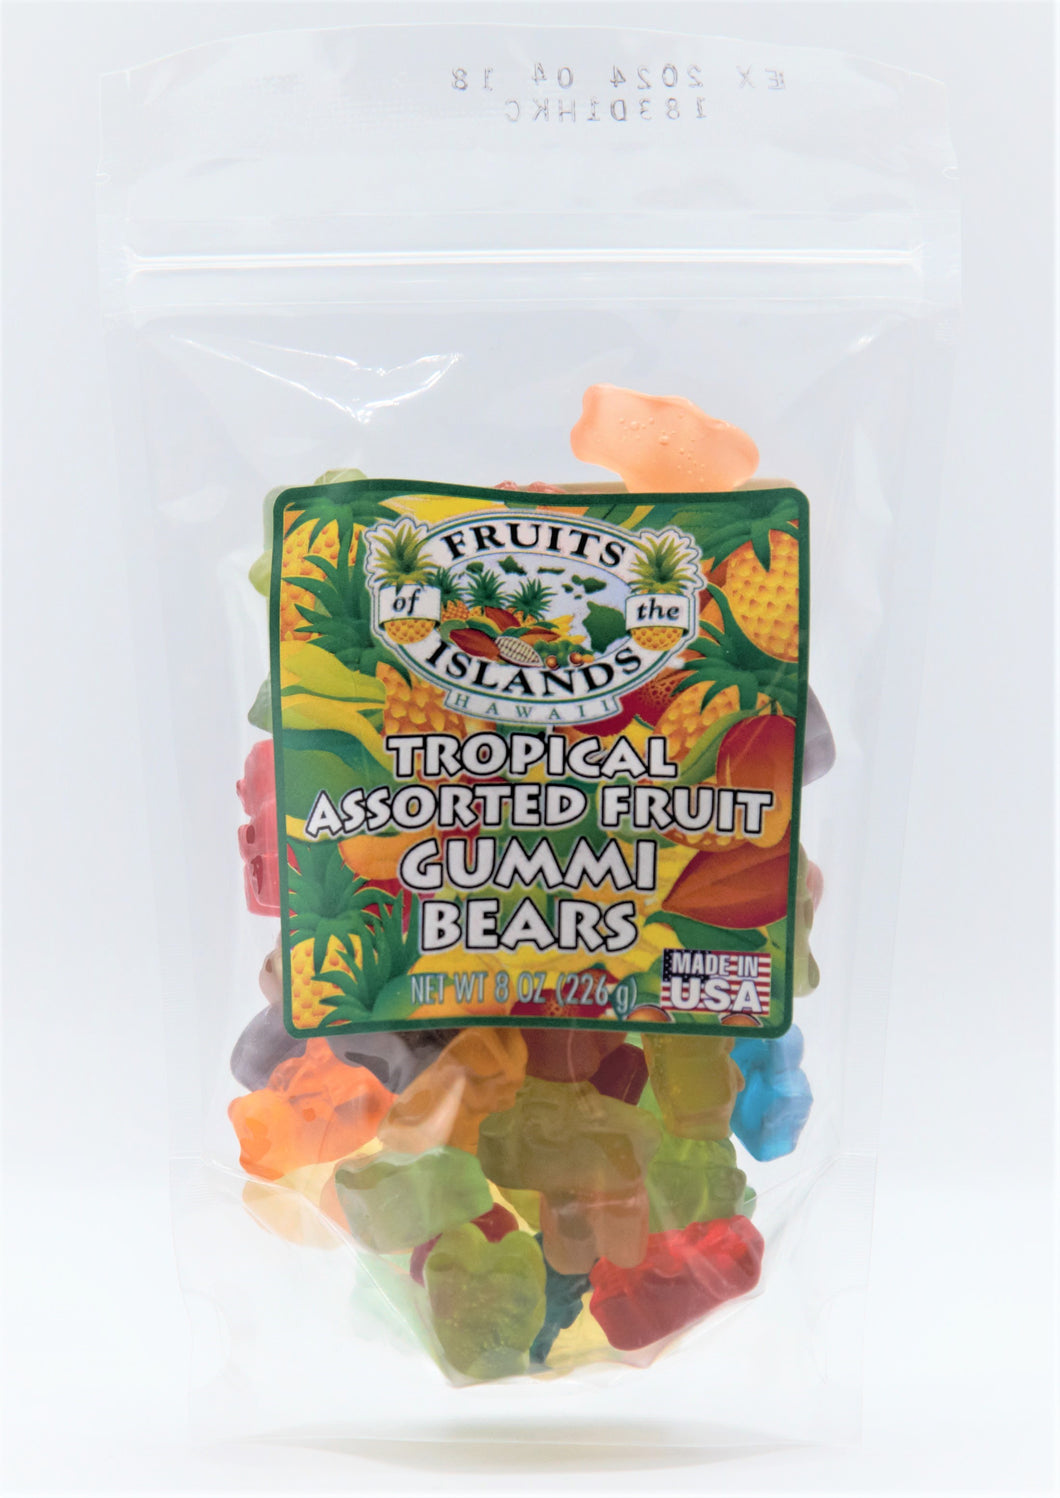 Tropical Assorted Fruit Gummi Bears Bag 8oz (226g)